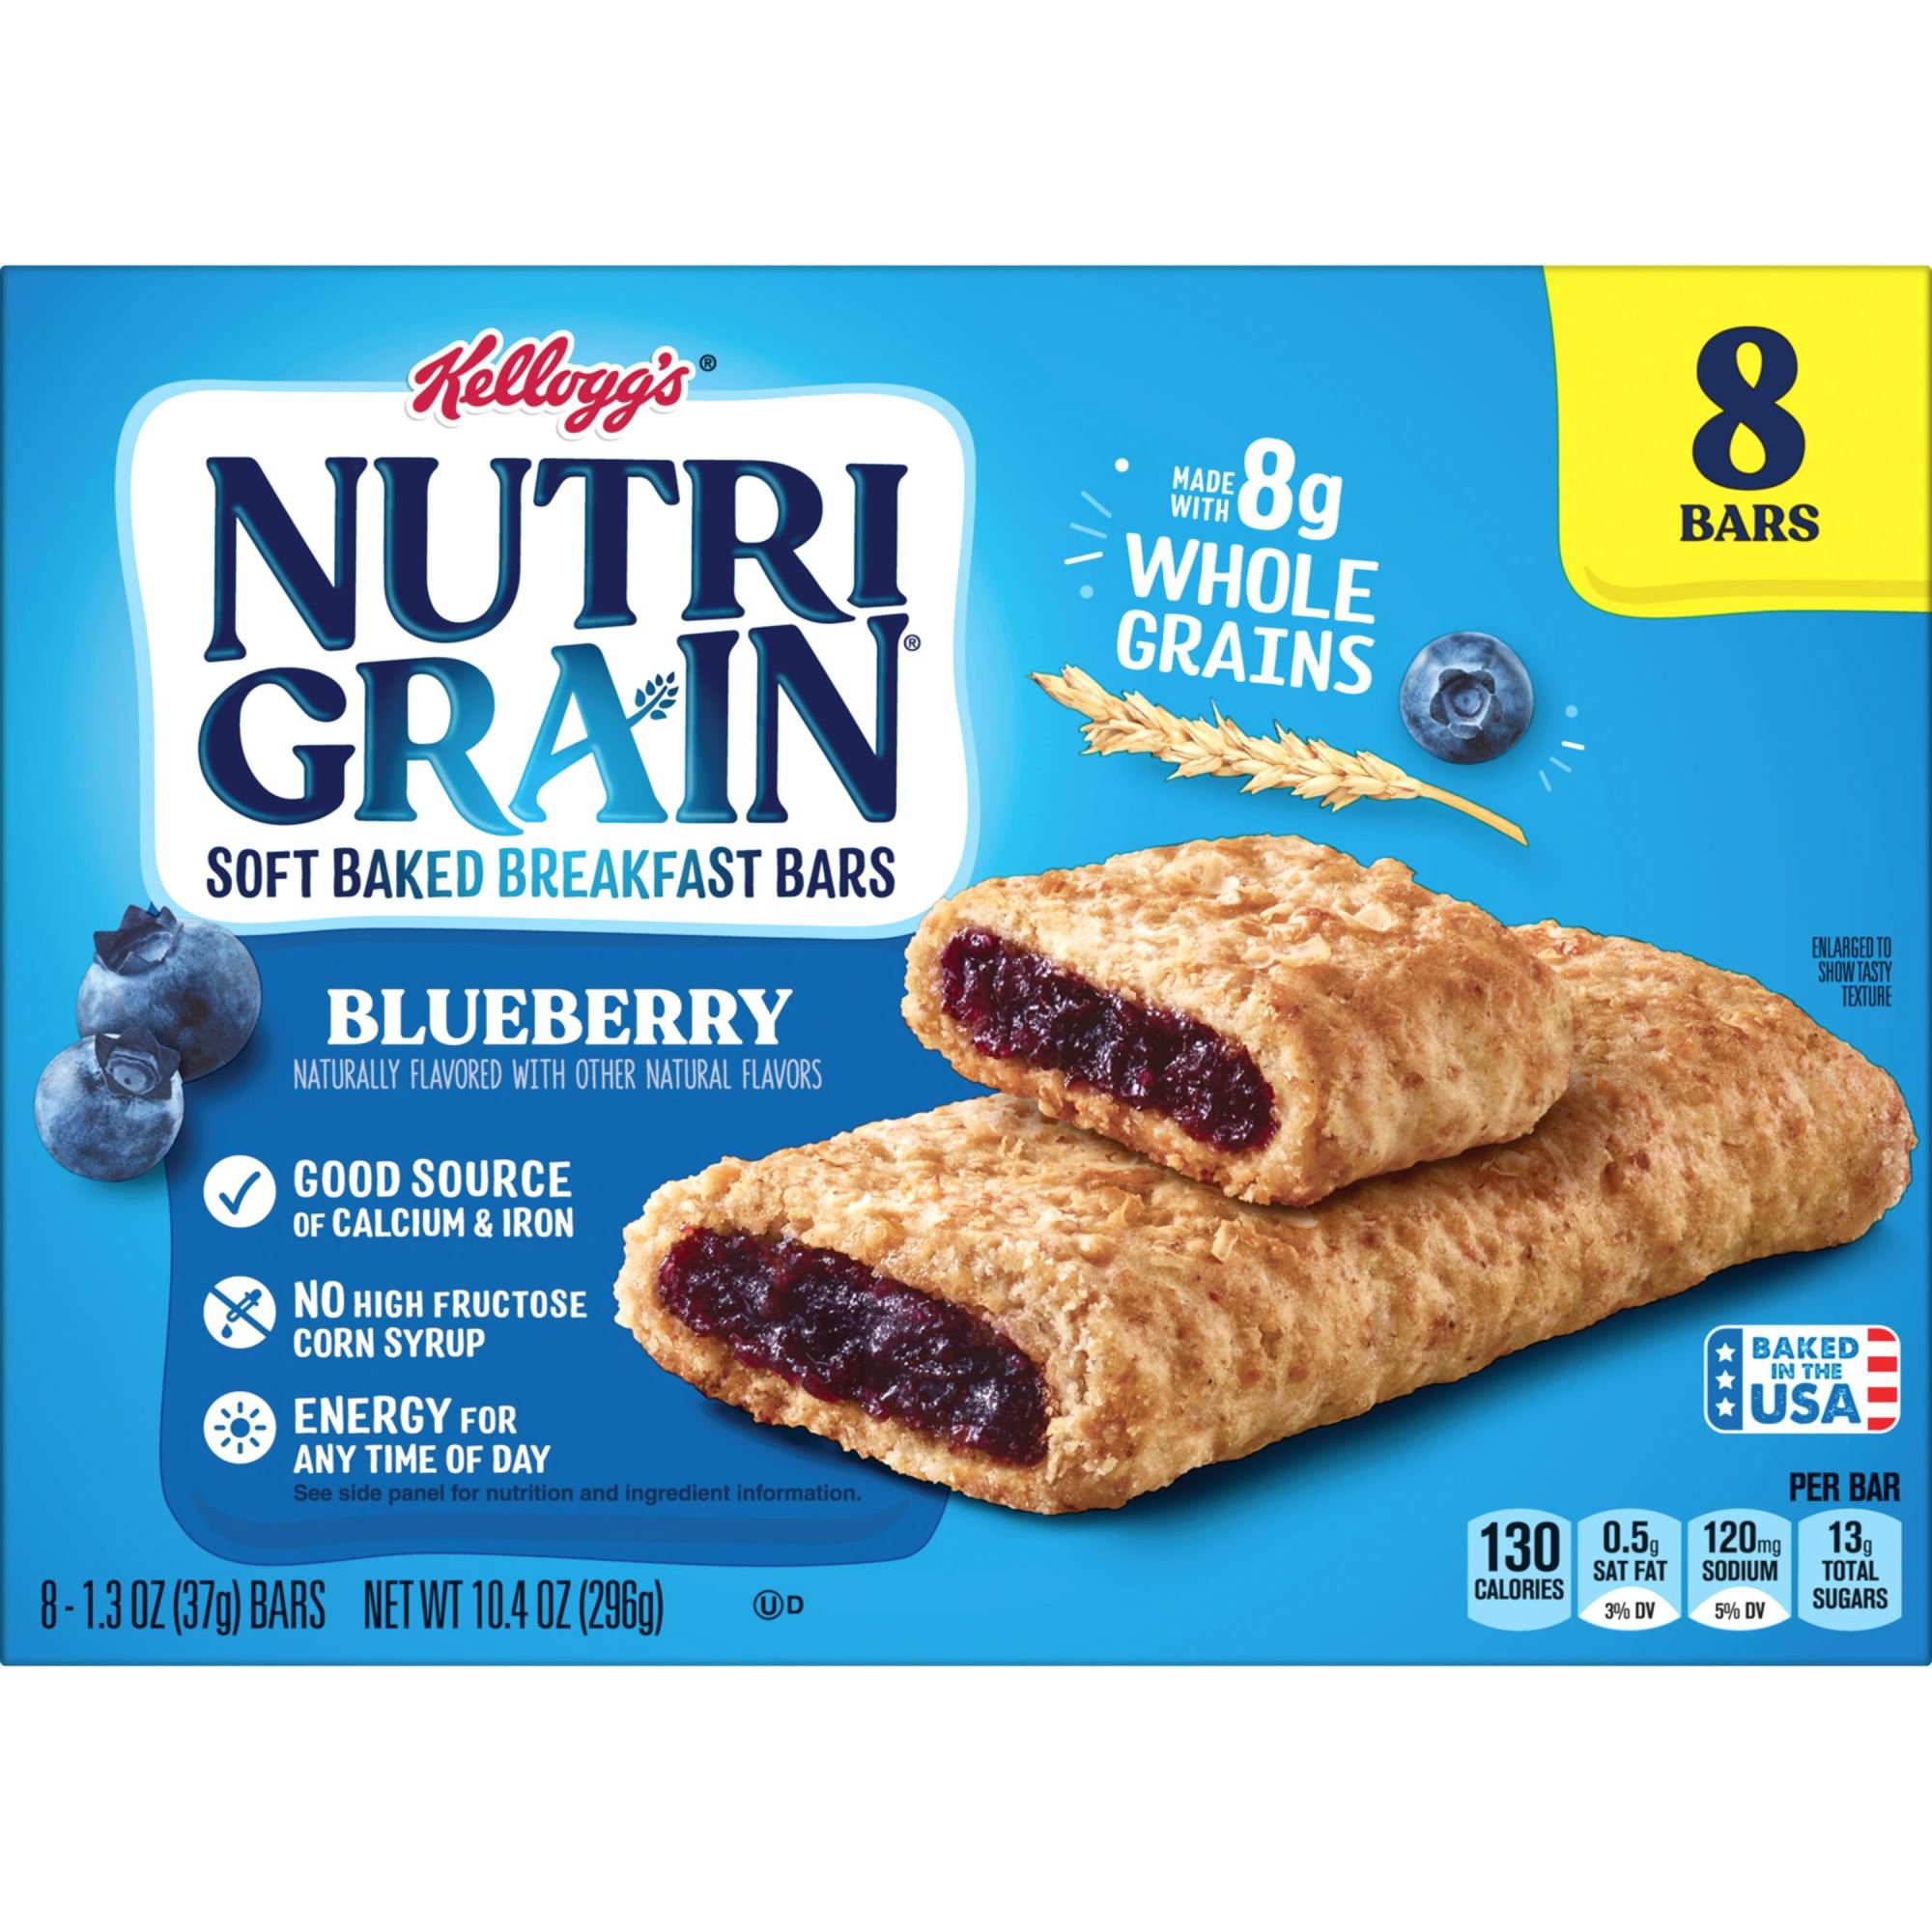 Iron Box – blueberry's